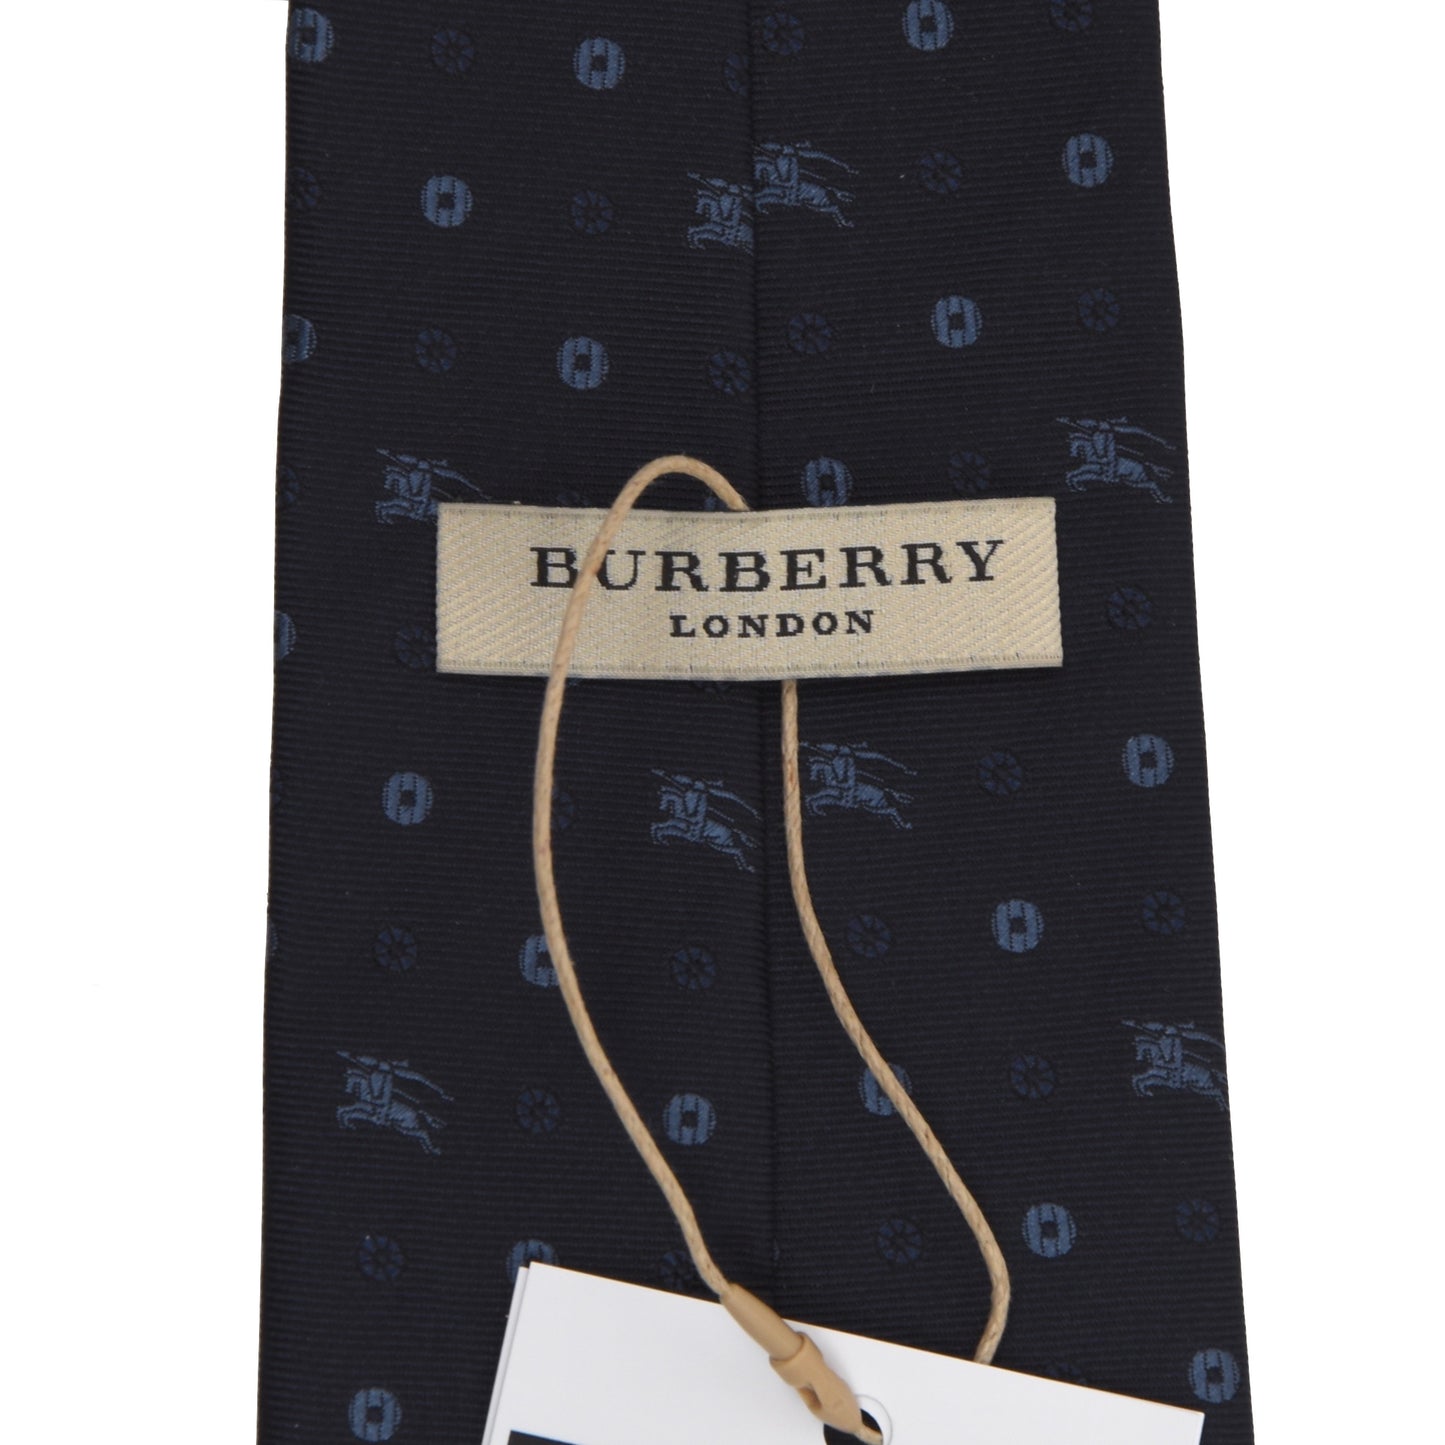 Burberry London Tie - Navy Blue Prorsum Knights